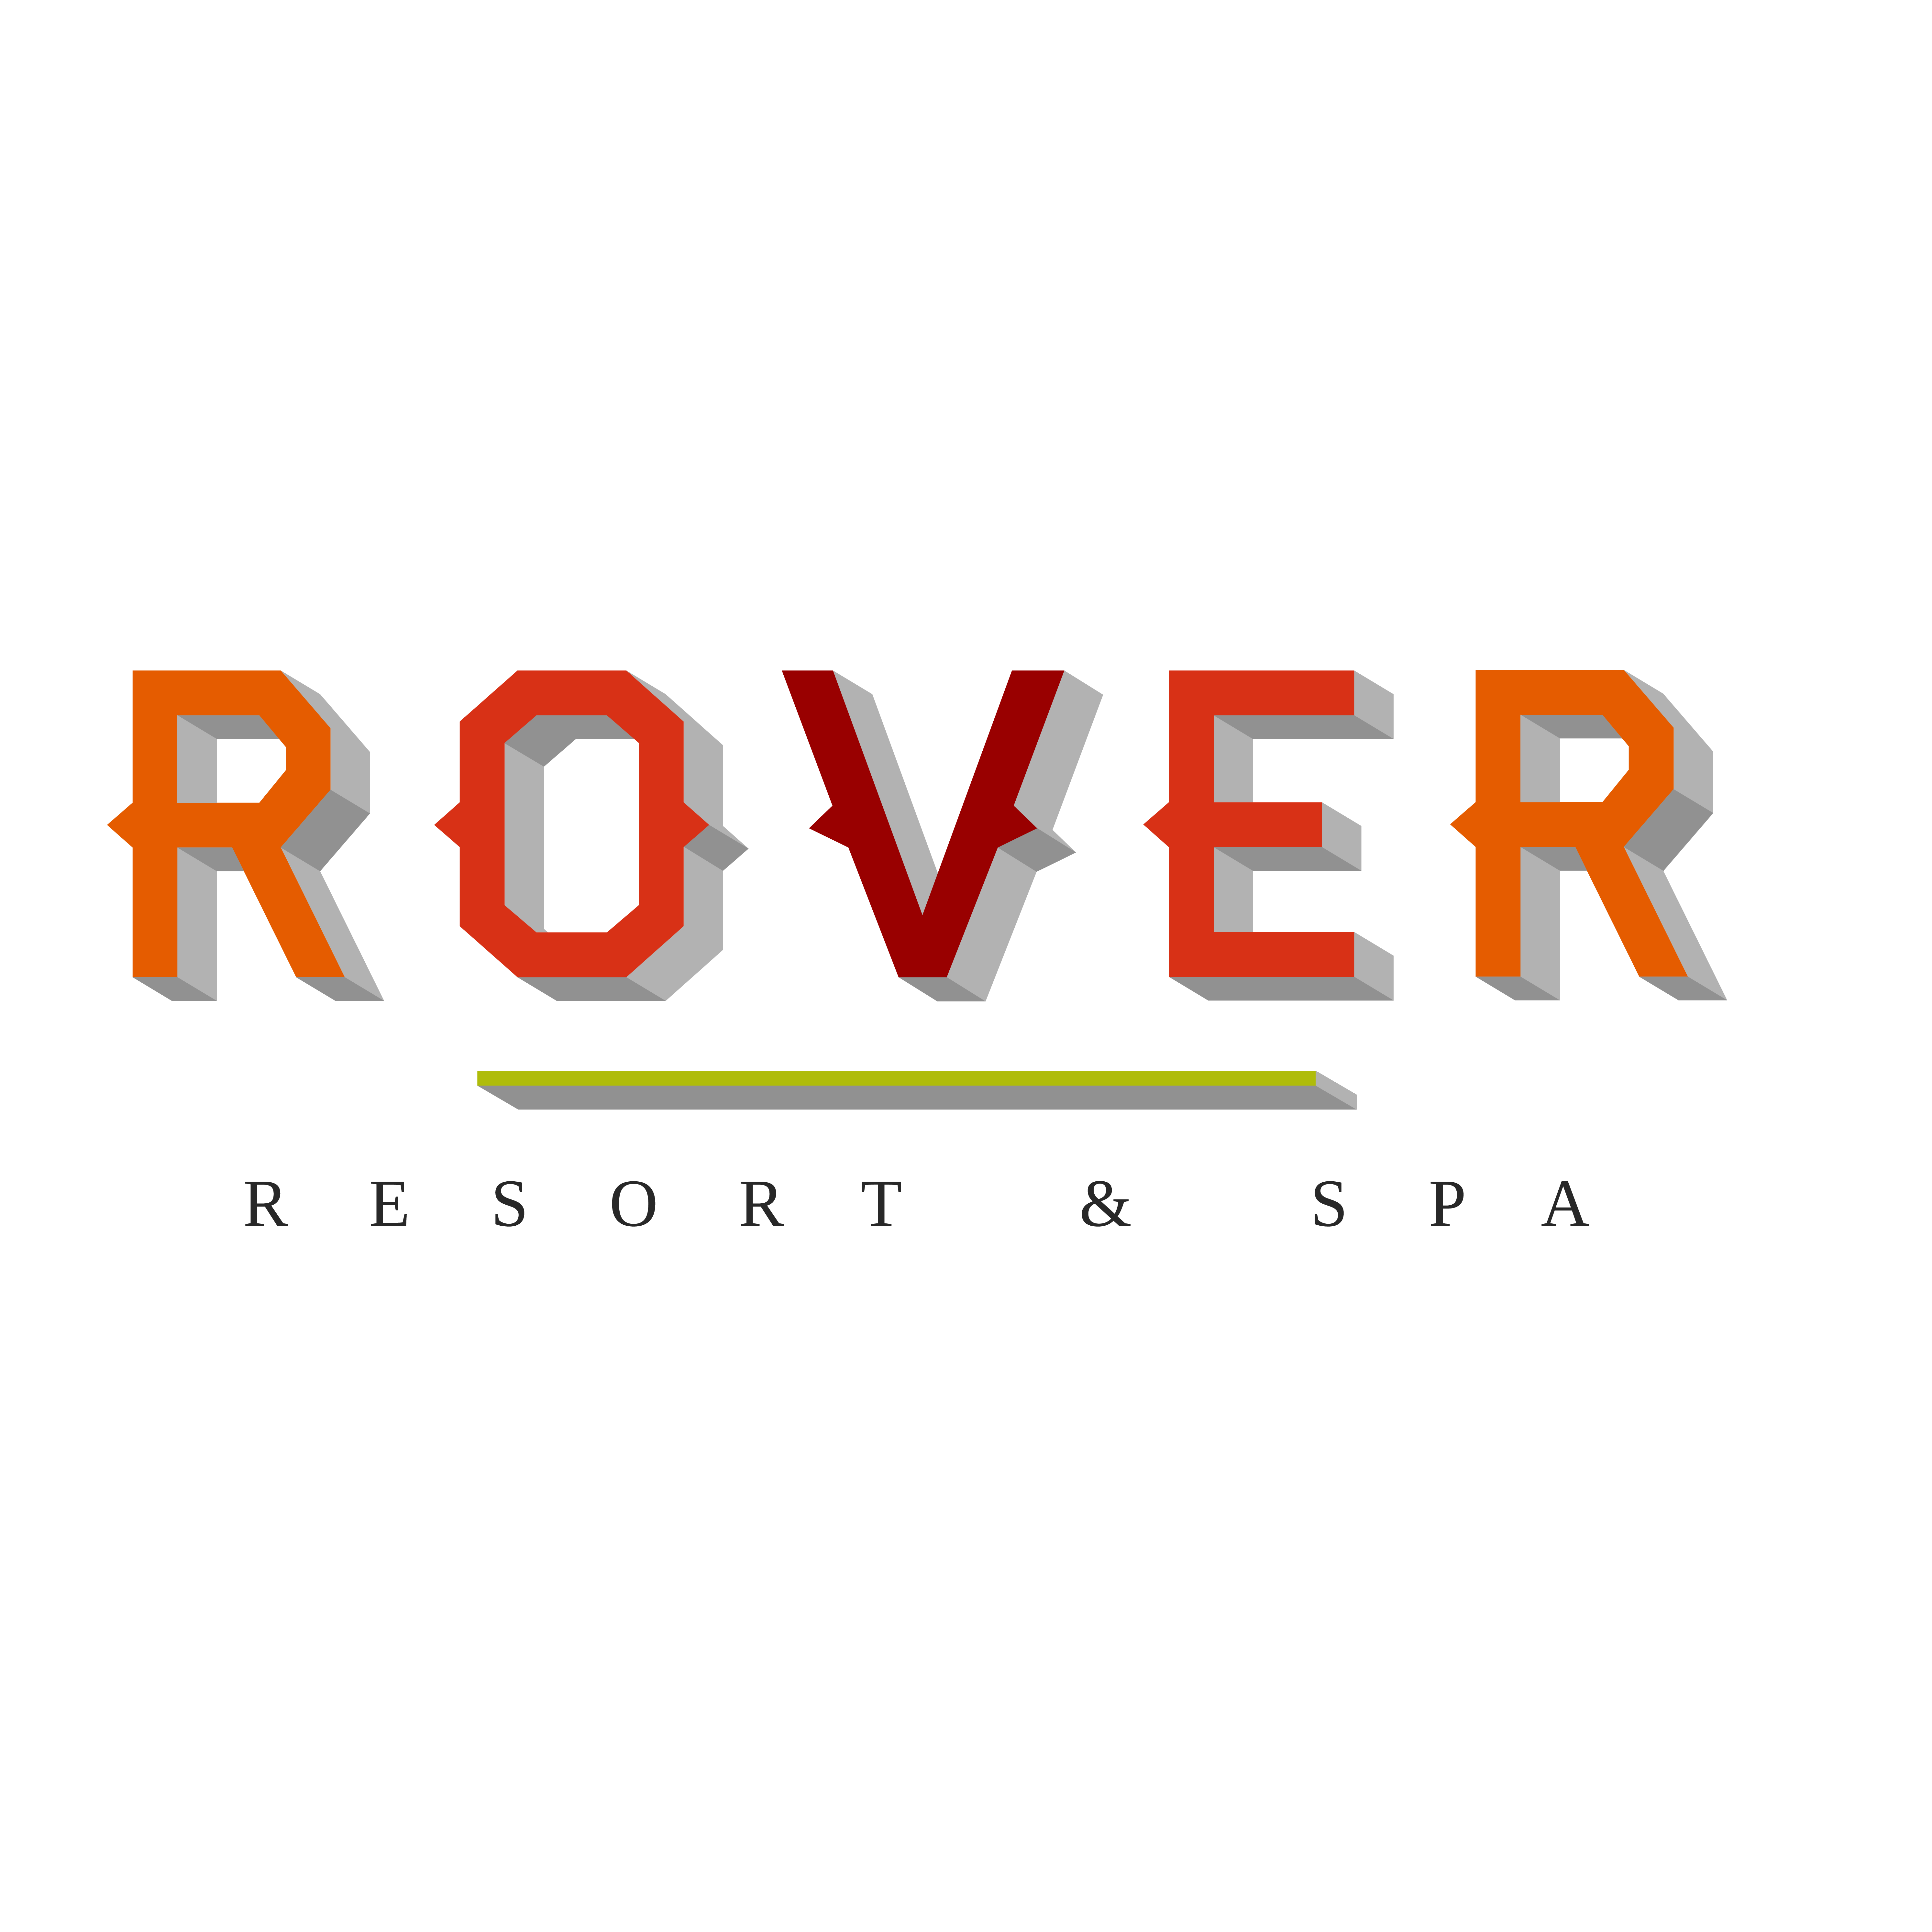 Rover Resort